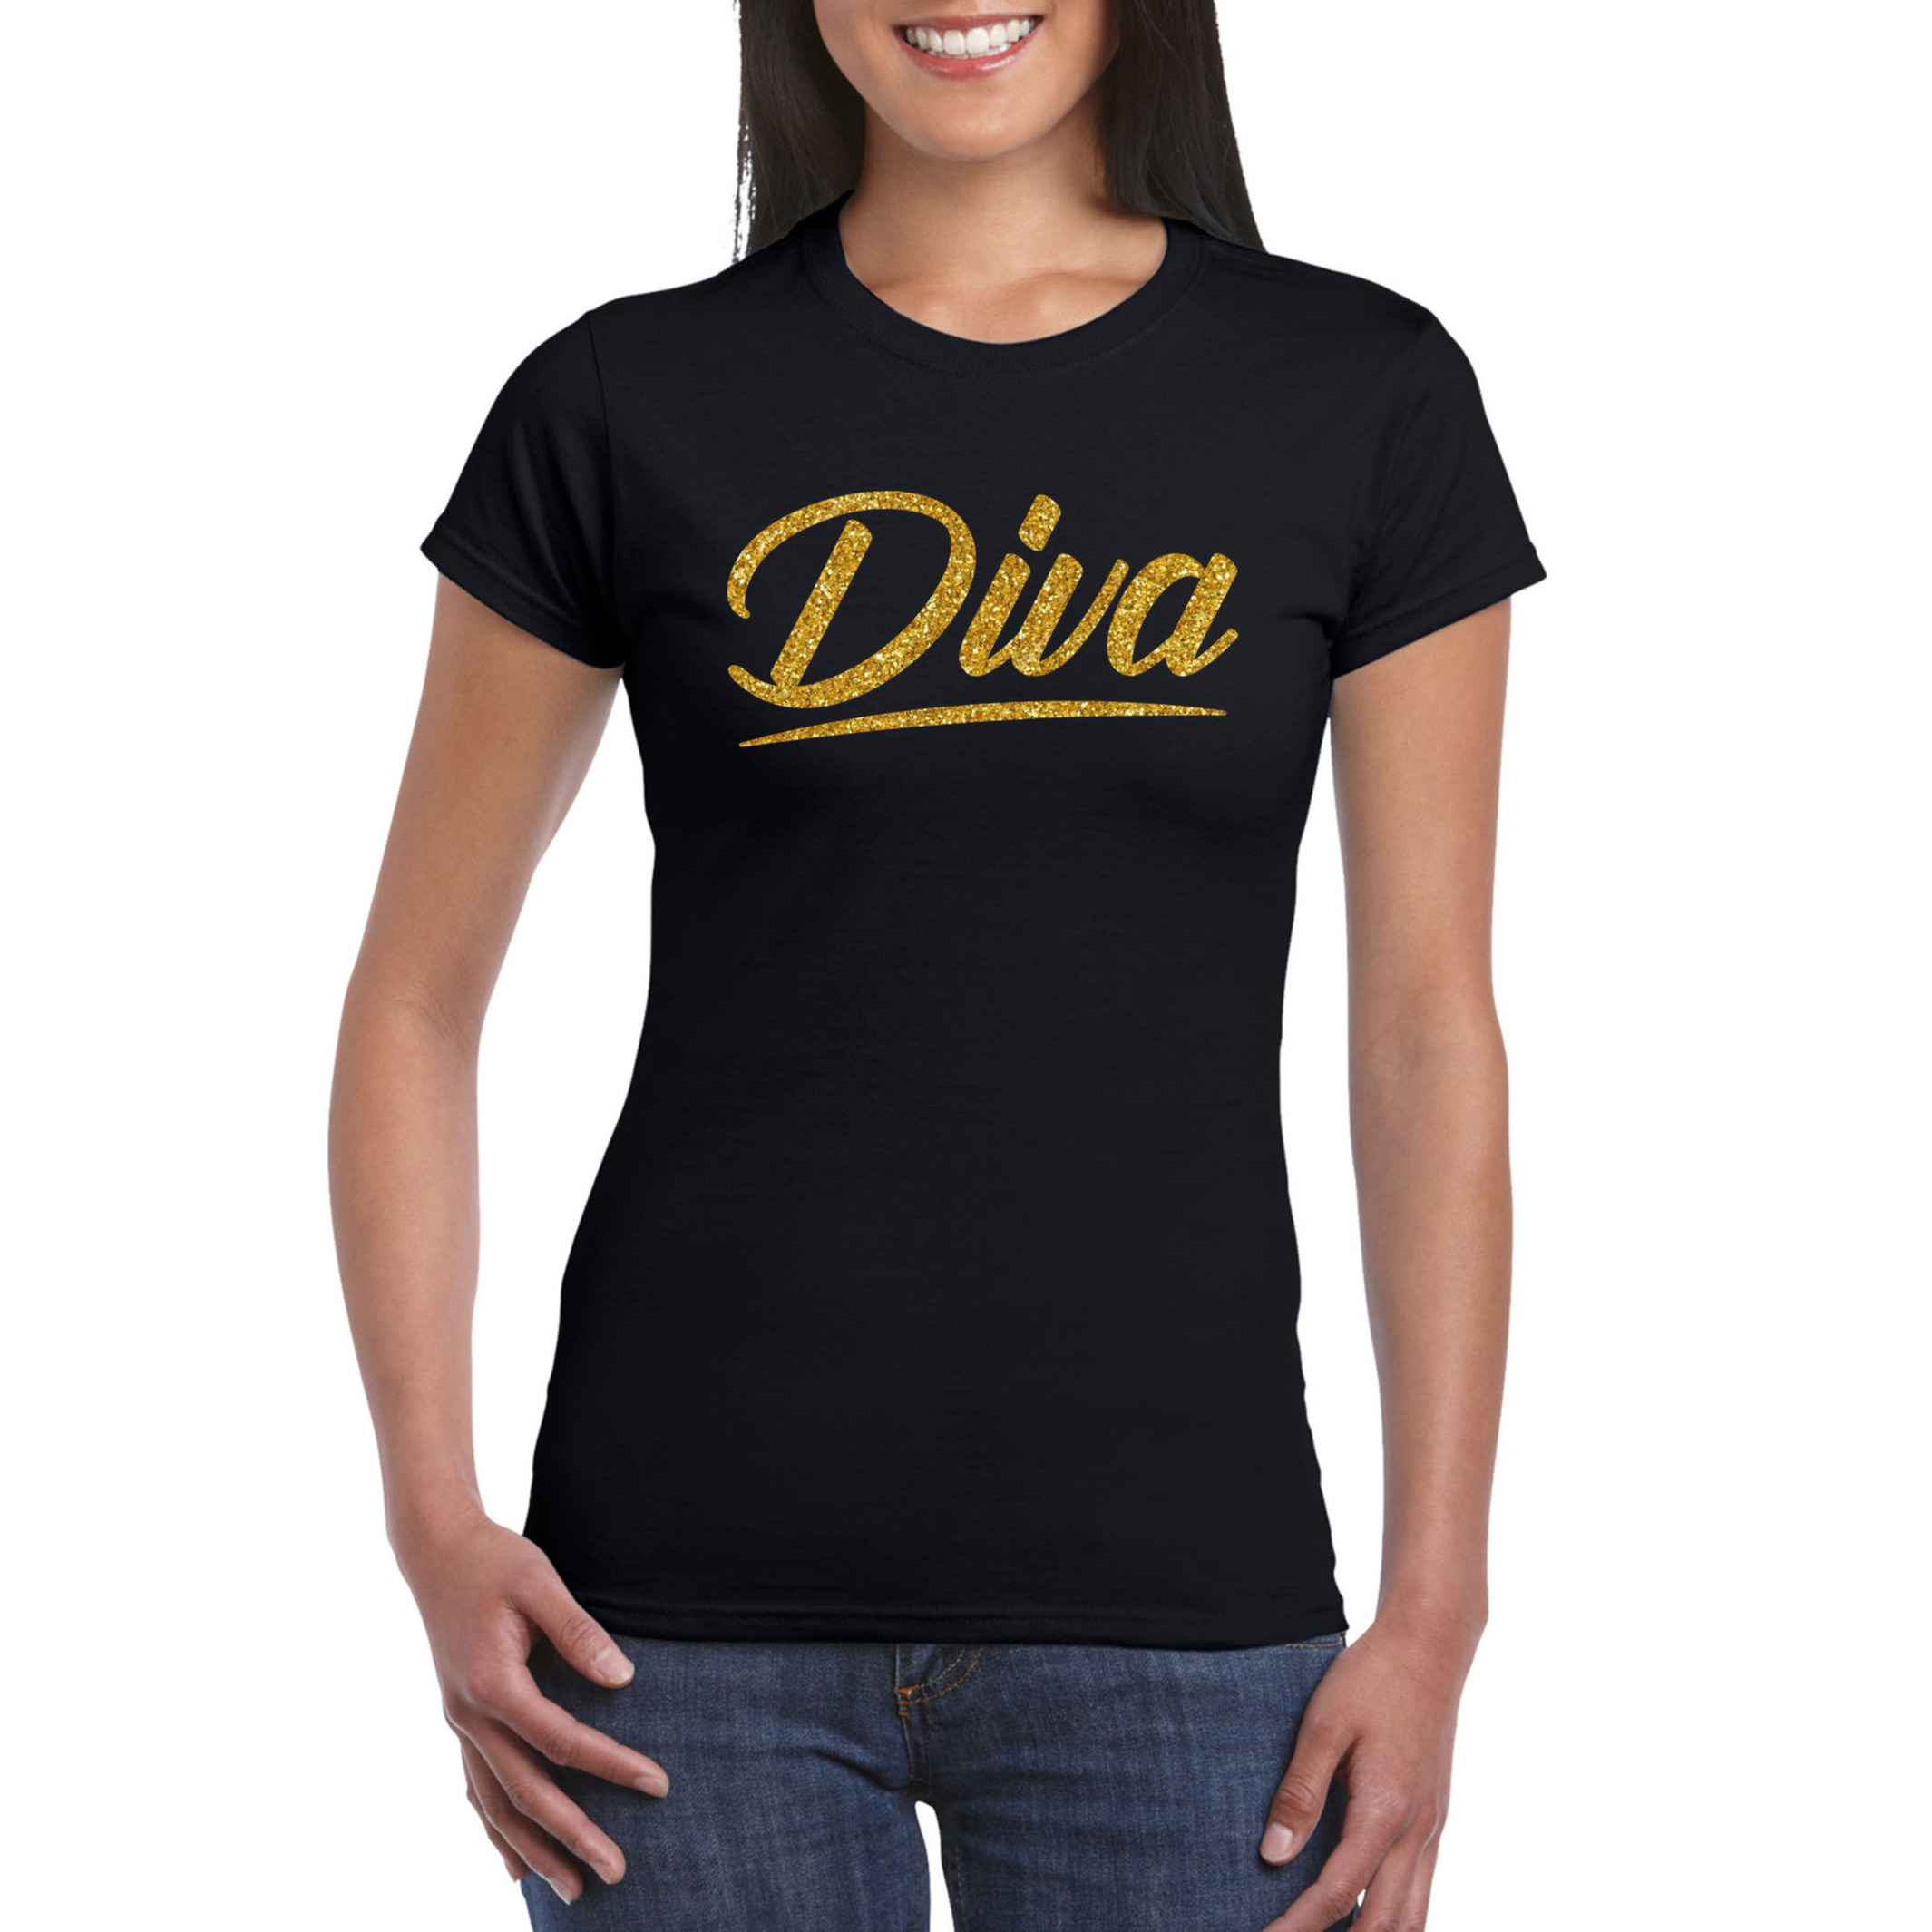 Diva goud tekst t-shirt zwart dames Glitter en Glamour goud party kleding shirt